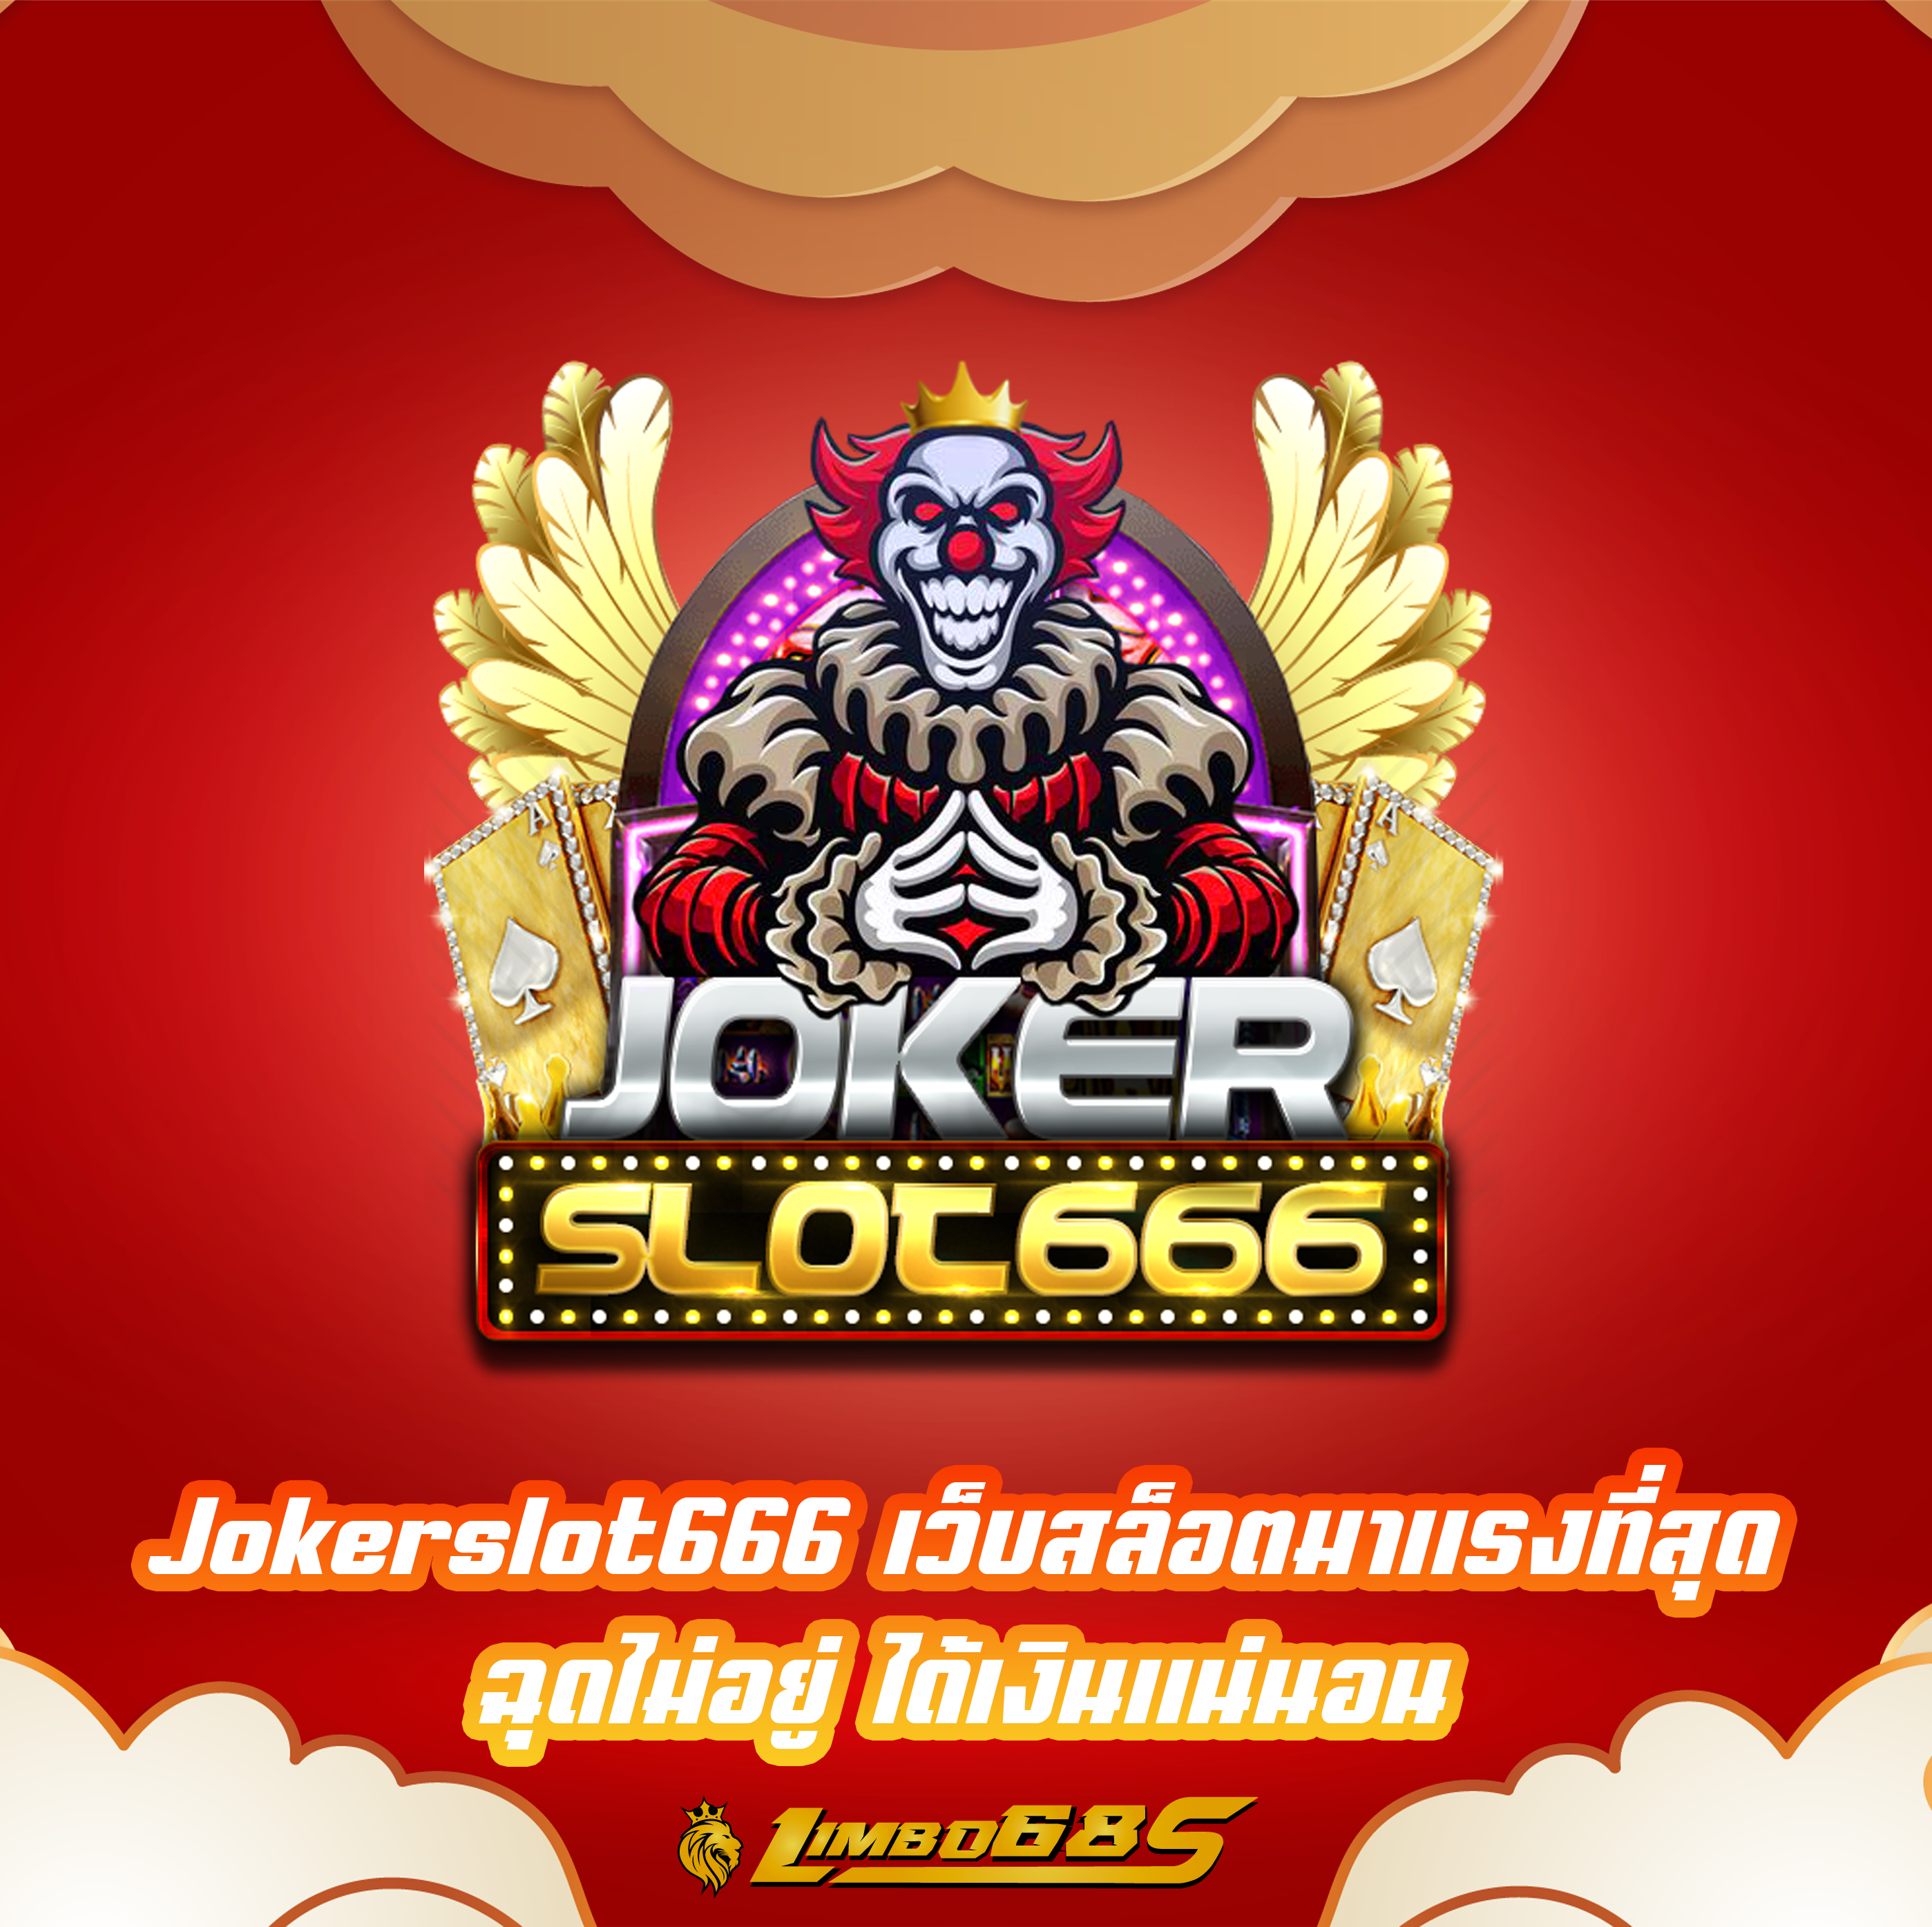 Jokerslot666